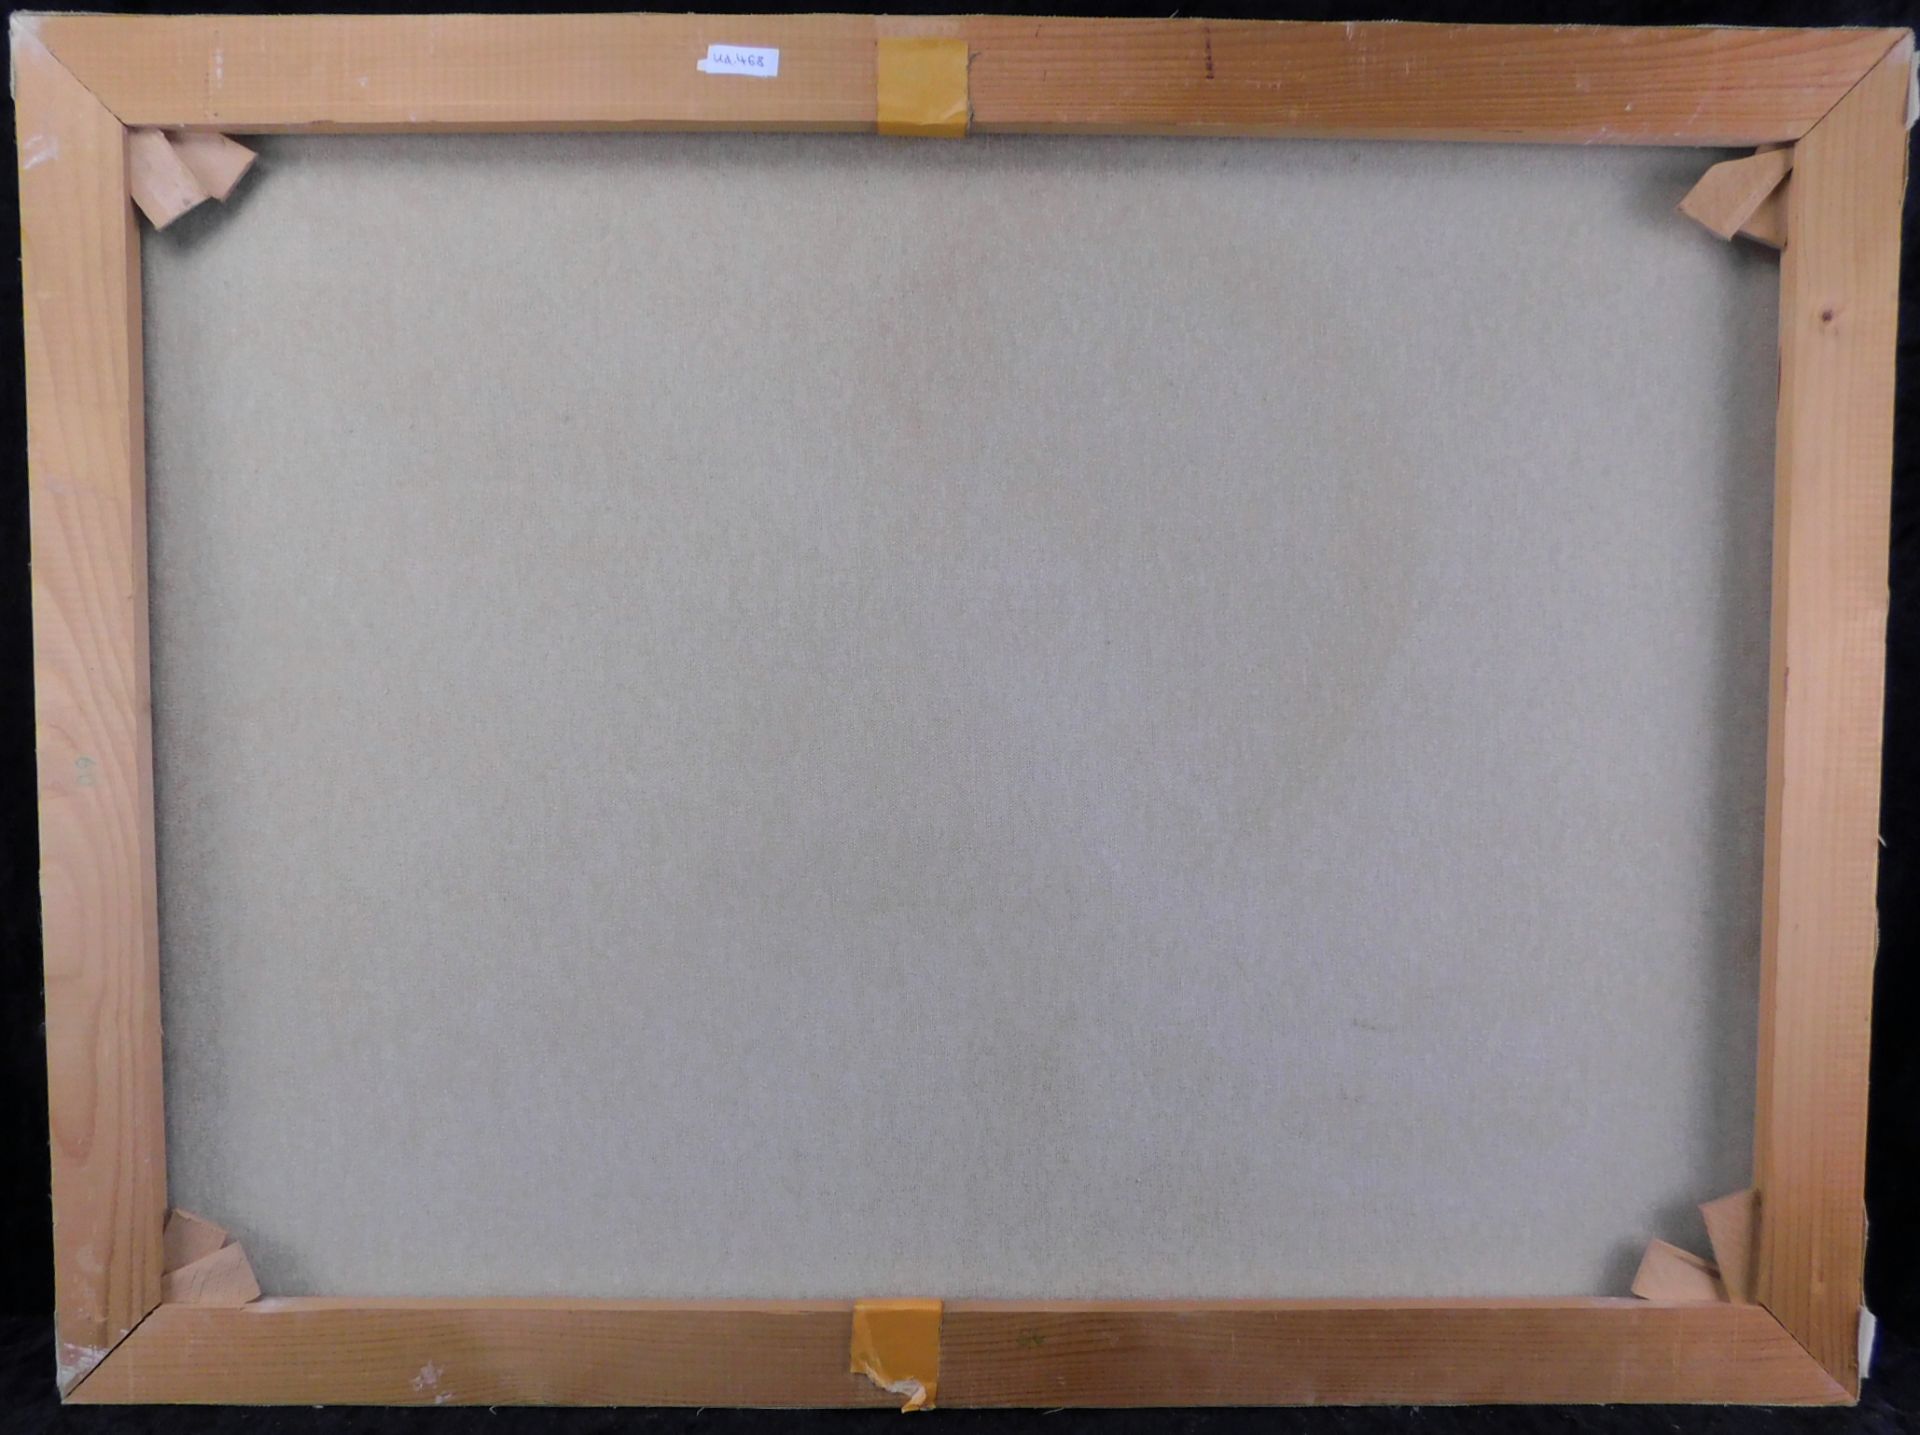 H. Boxbücher, Abstrakte Komposition, Acryl/ Leinwand, sig. u. datiert (19)92, 60 x 80 cm - Image 3 of 3